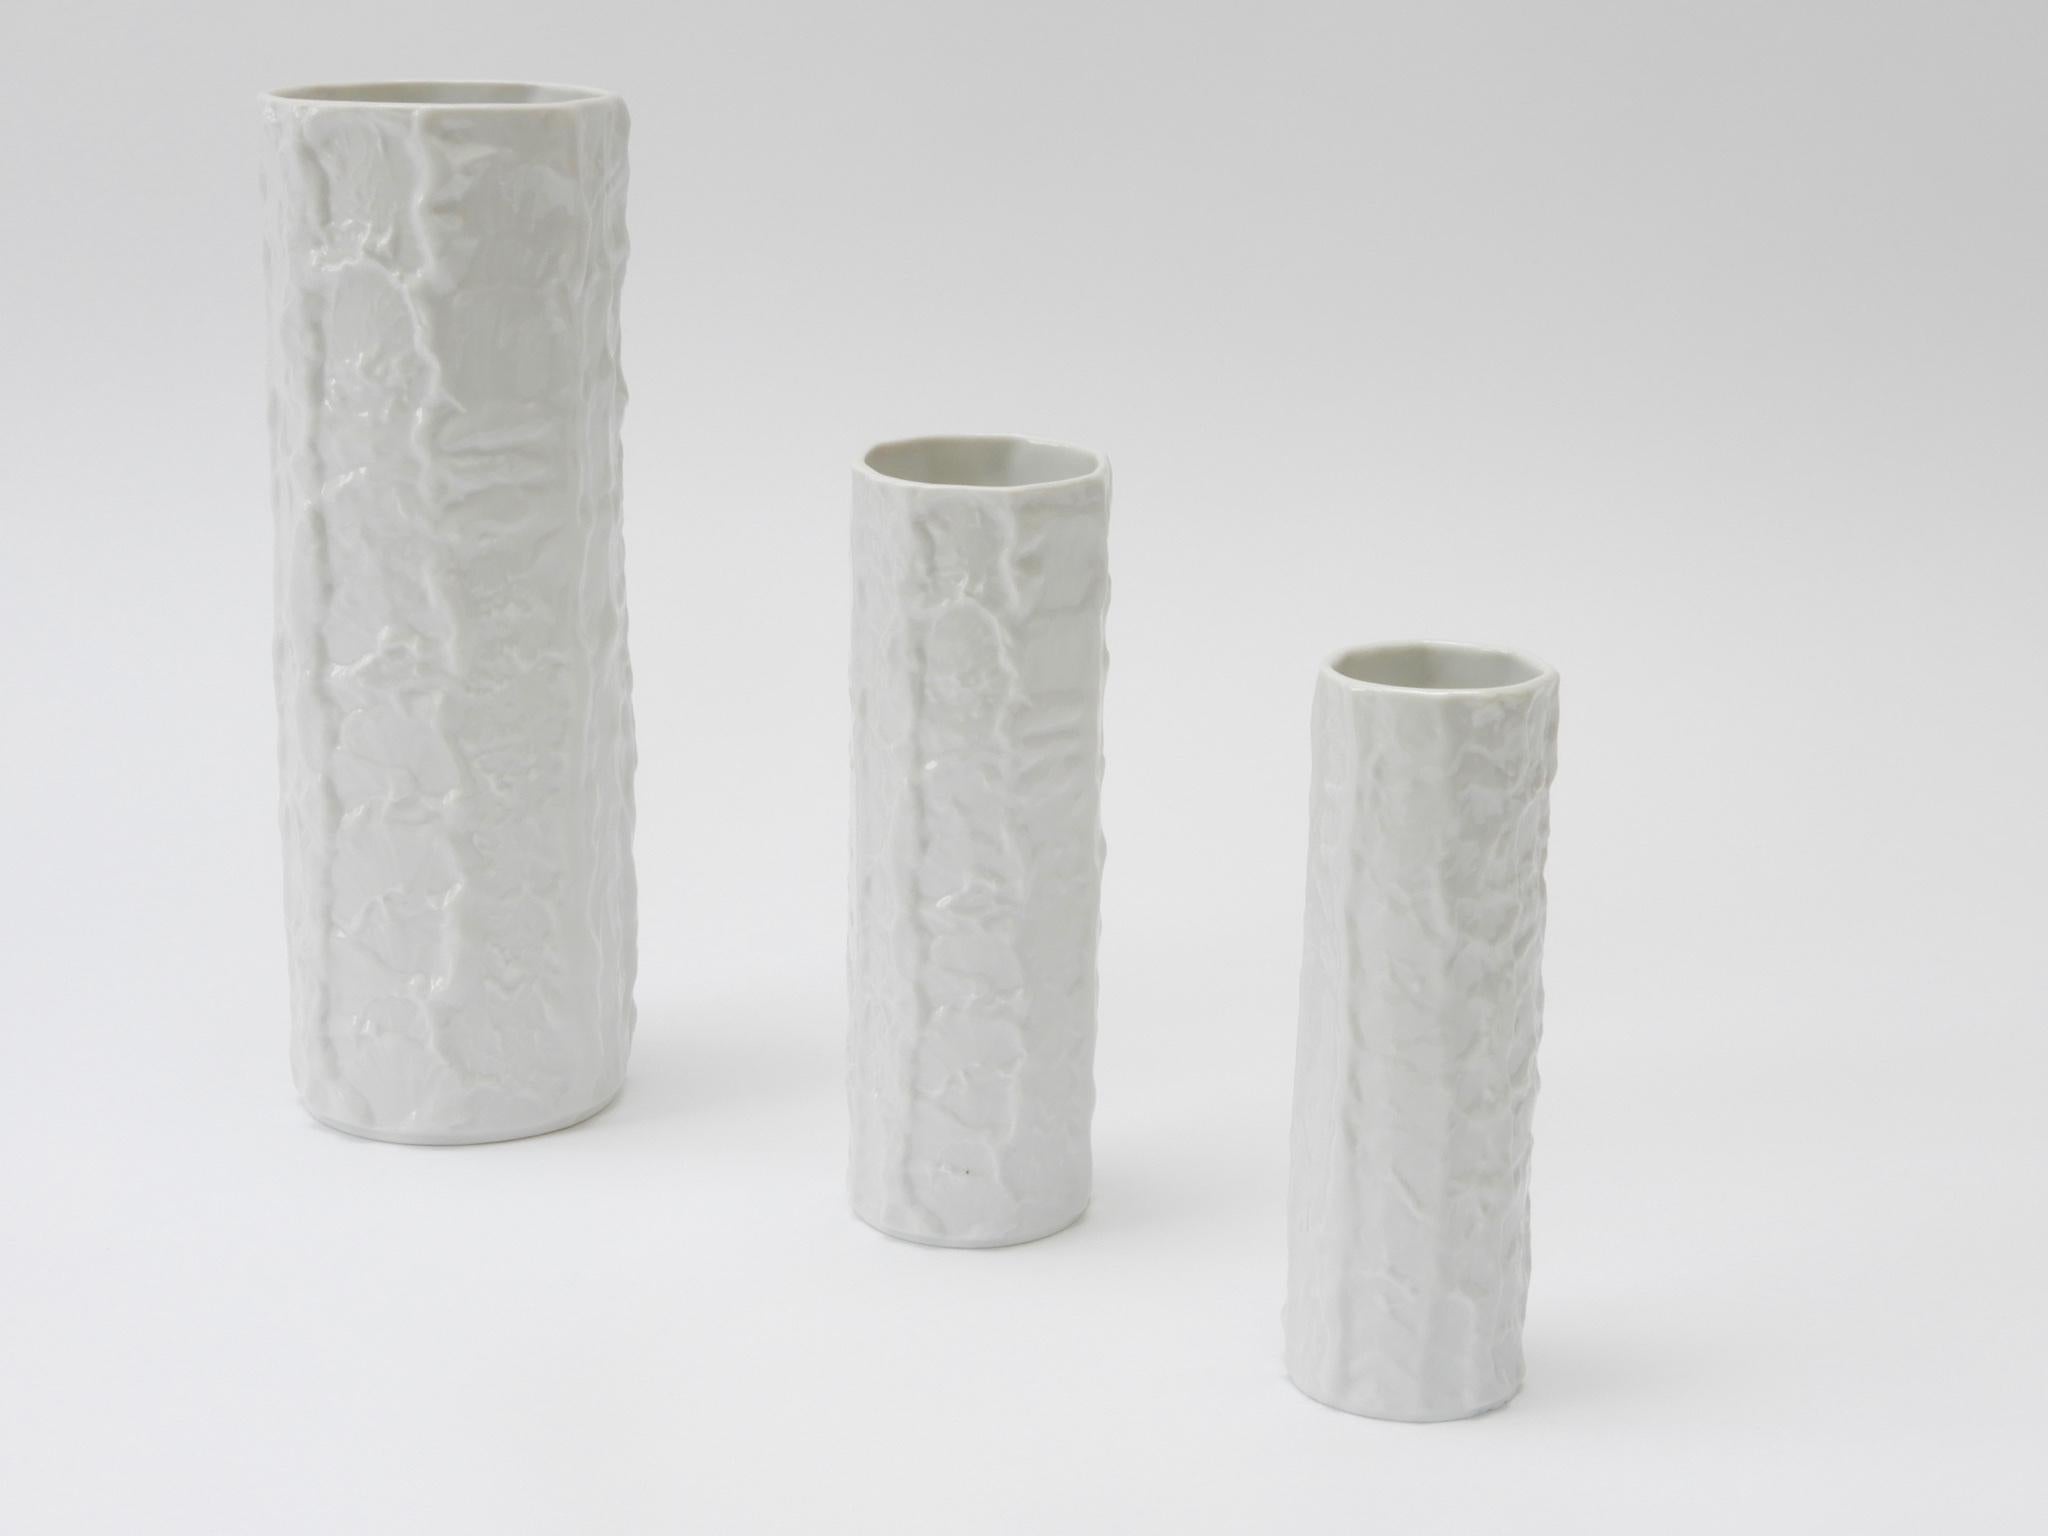 Set of three German white circular ceramic vases, 1960s.

Large size :-
D: 9cm
H: 26cm

Medium size:-
D: 6cm
H: 18.5cm

Small Size:-
D: 5cm
H: 16.5cm